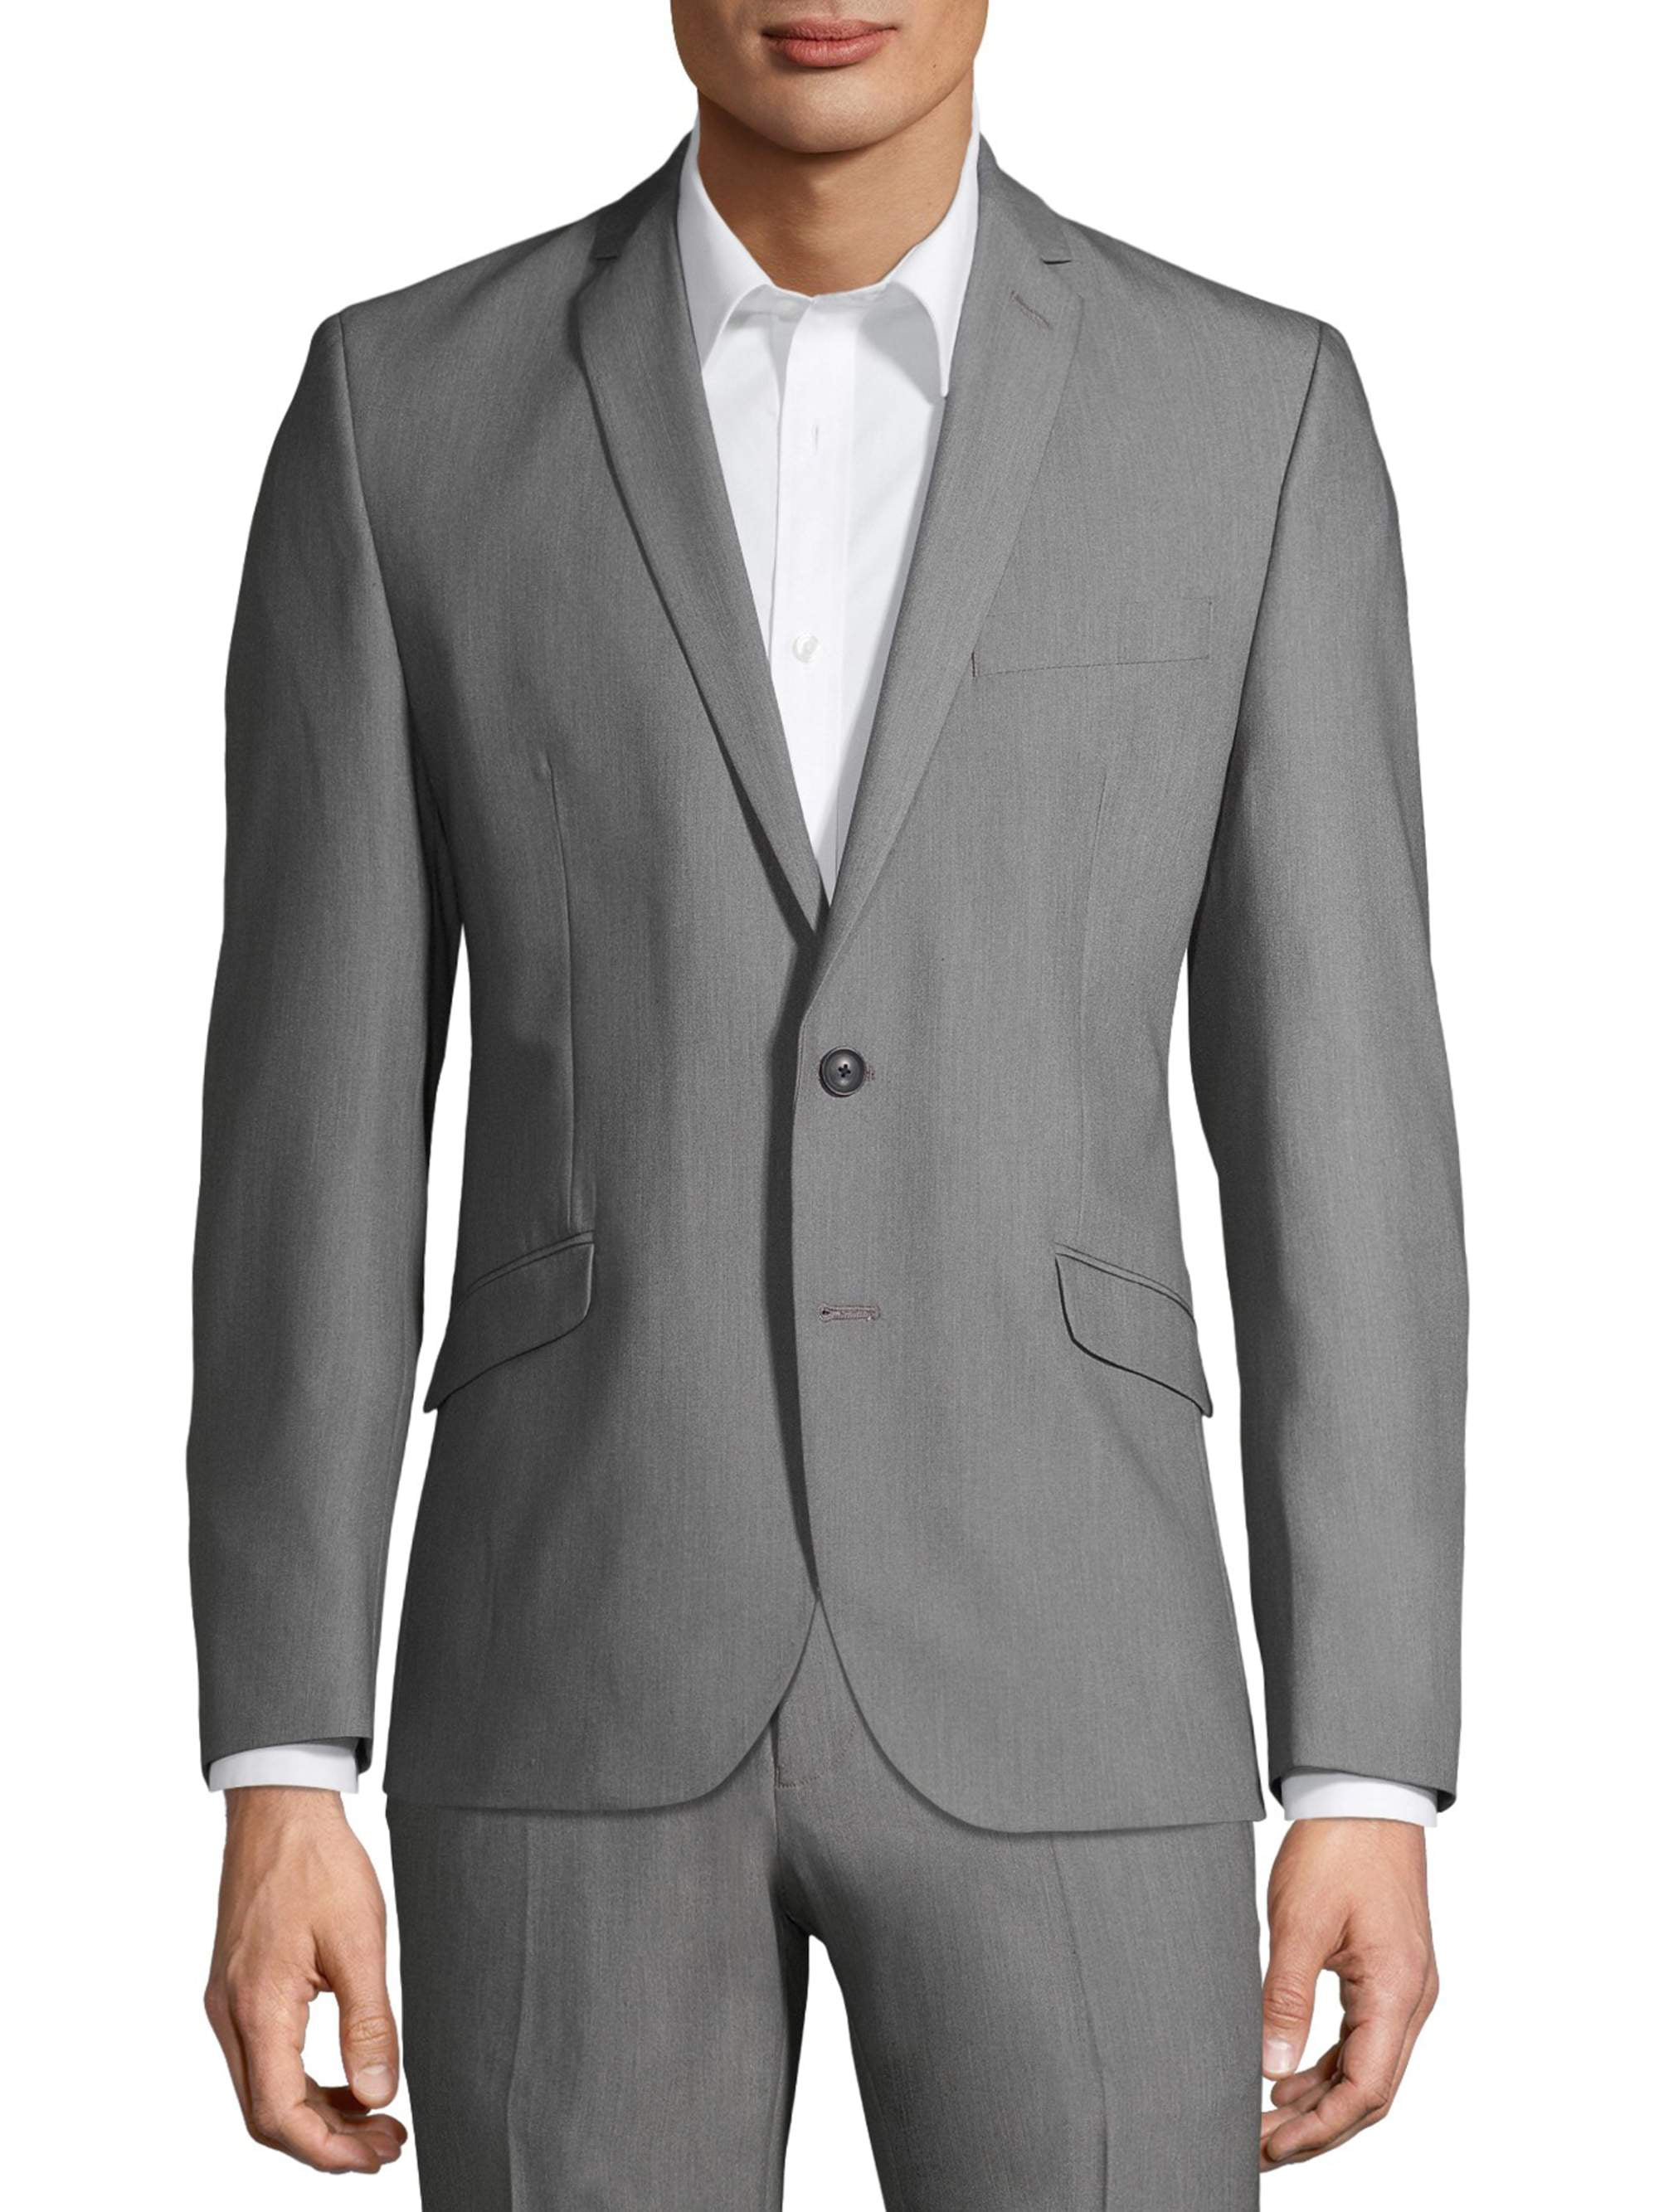 Billy London Mens Slim Fit Suit Separate Blazer, Pant, and Vest